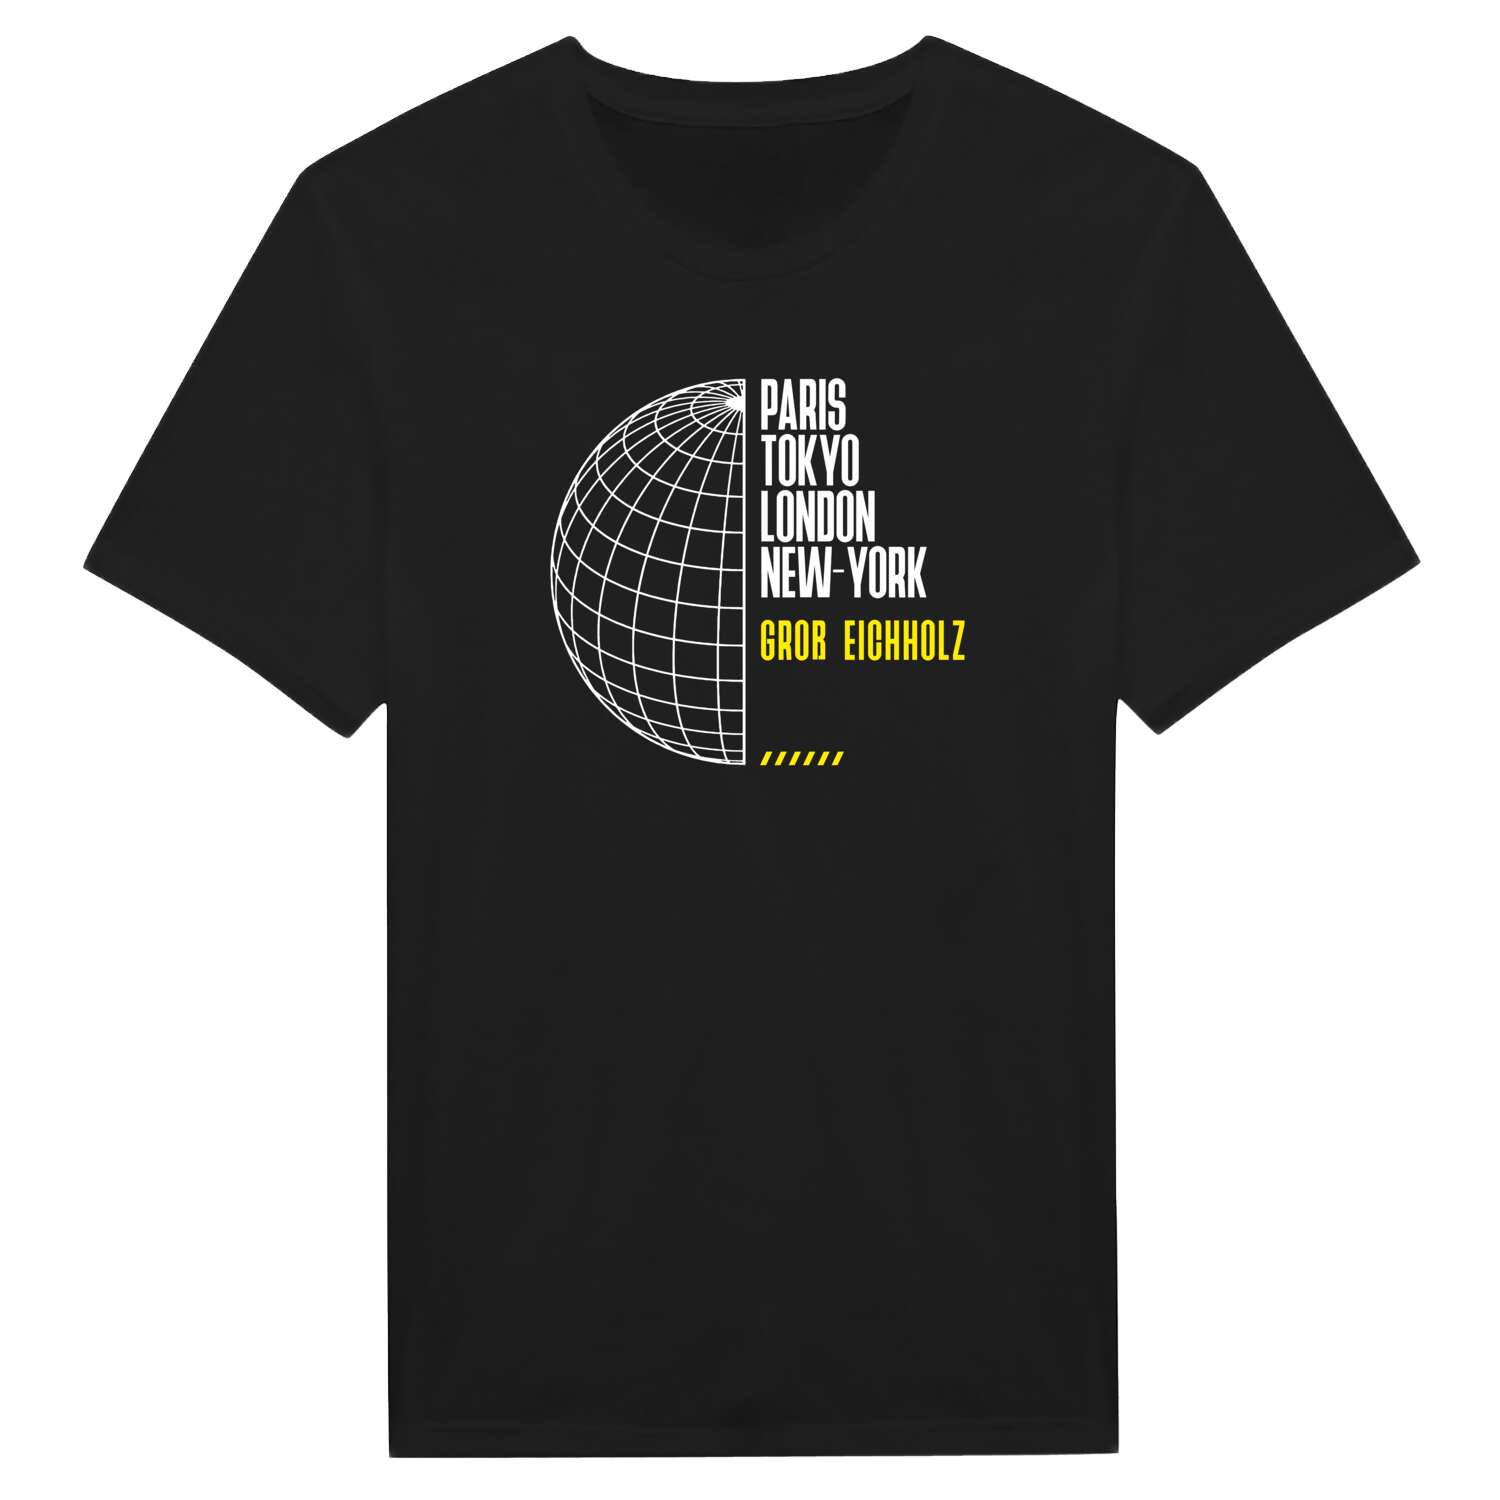 Groß Eichholz T-Shirt »Paris Tokyo London«